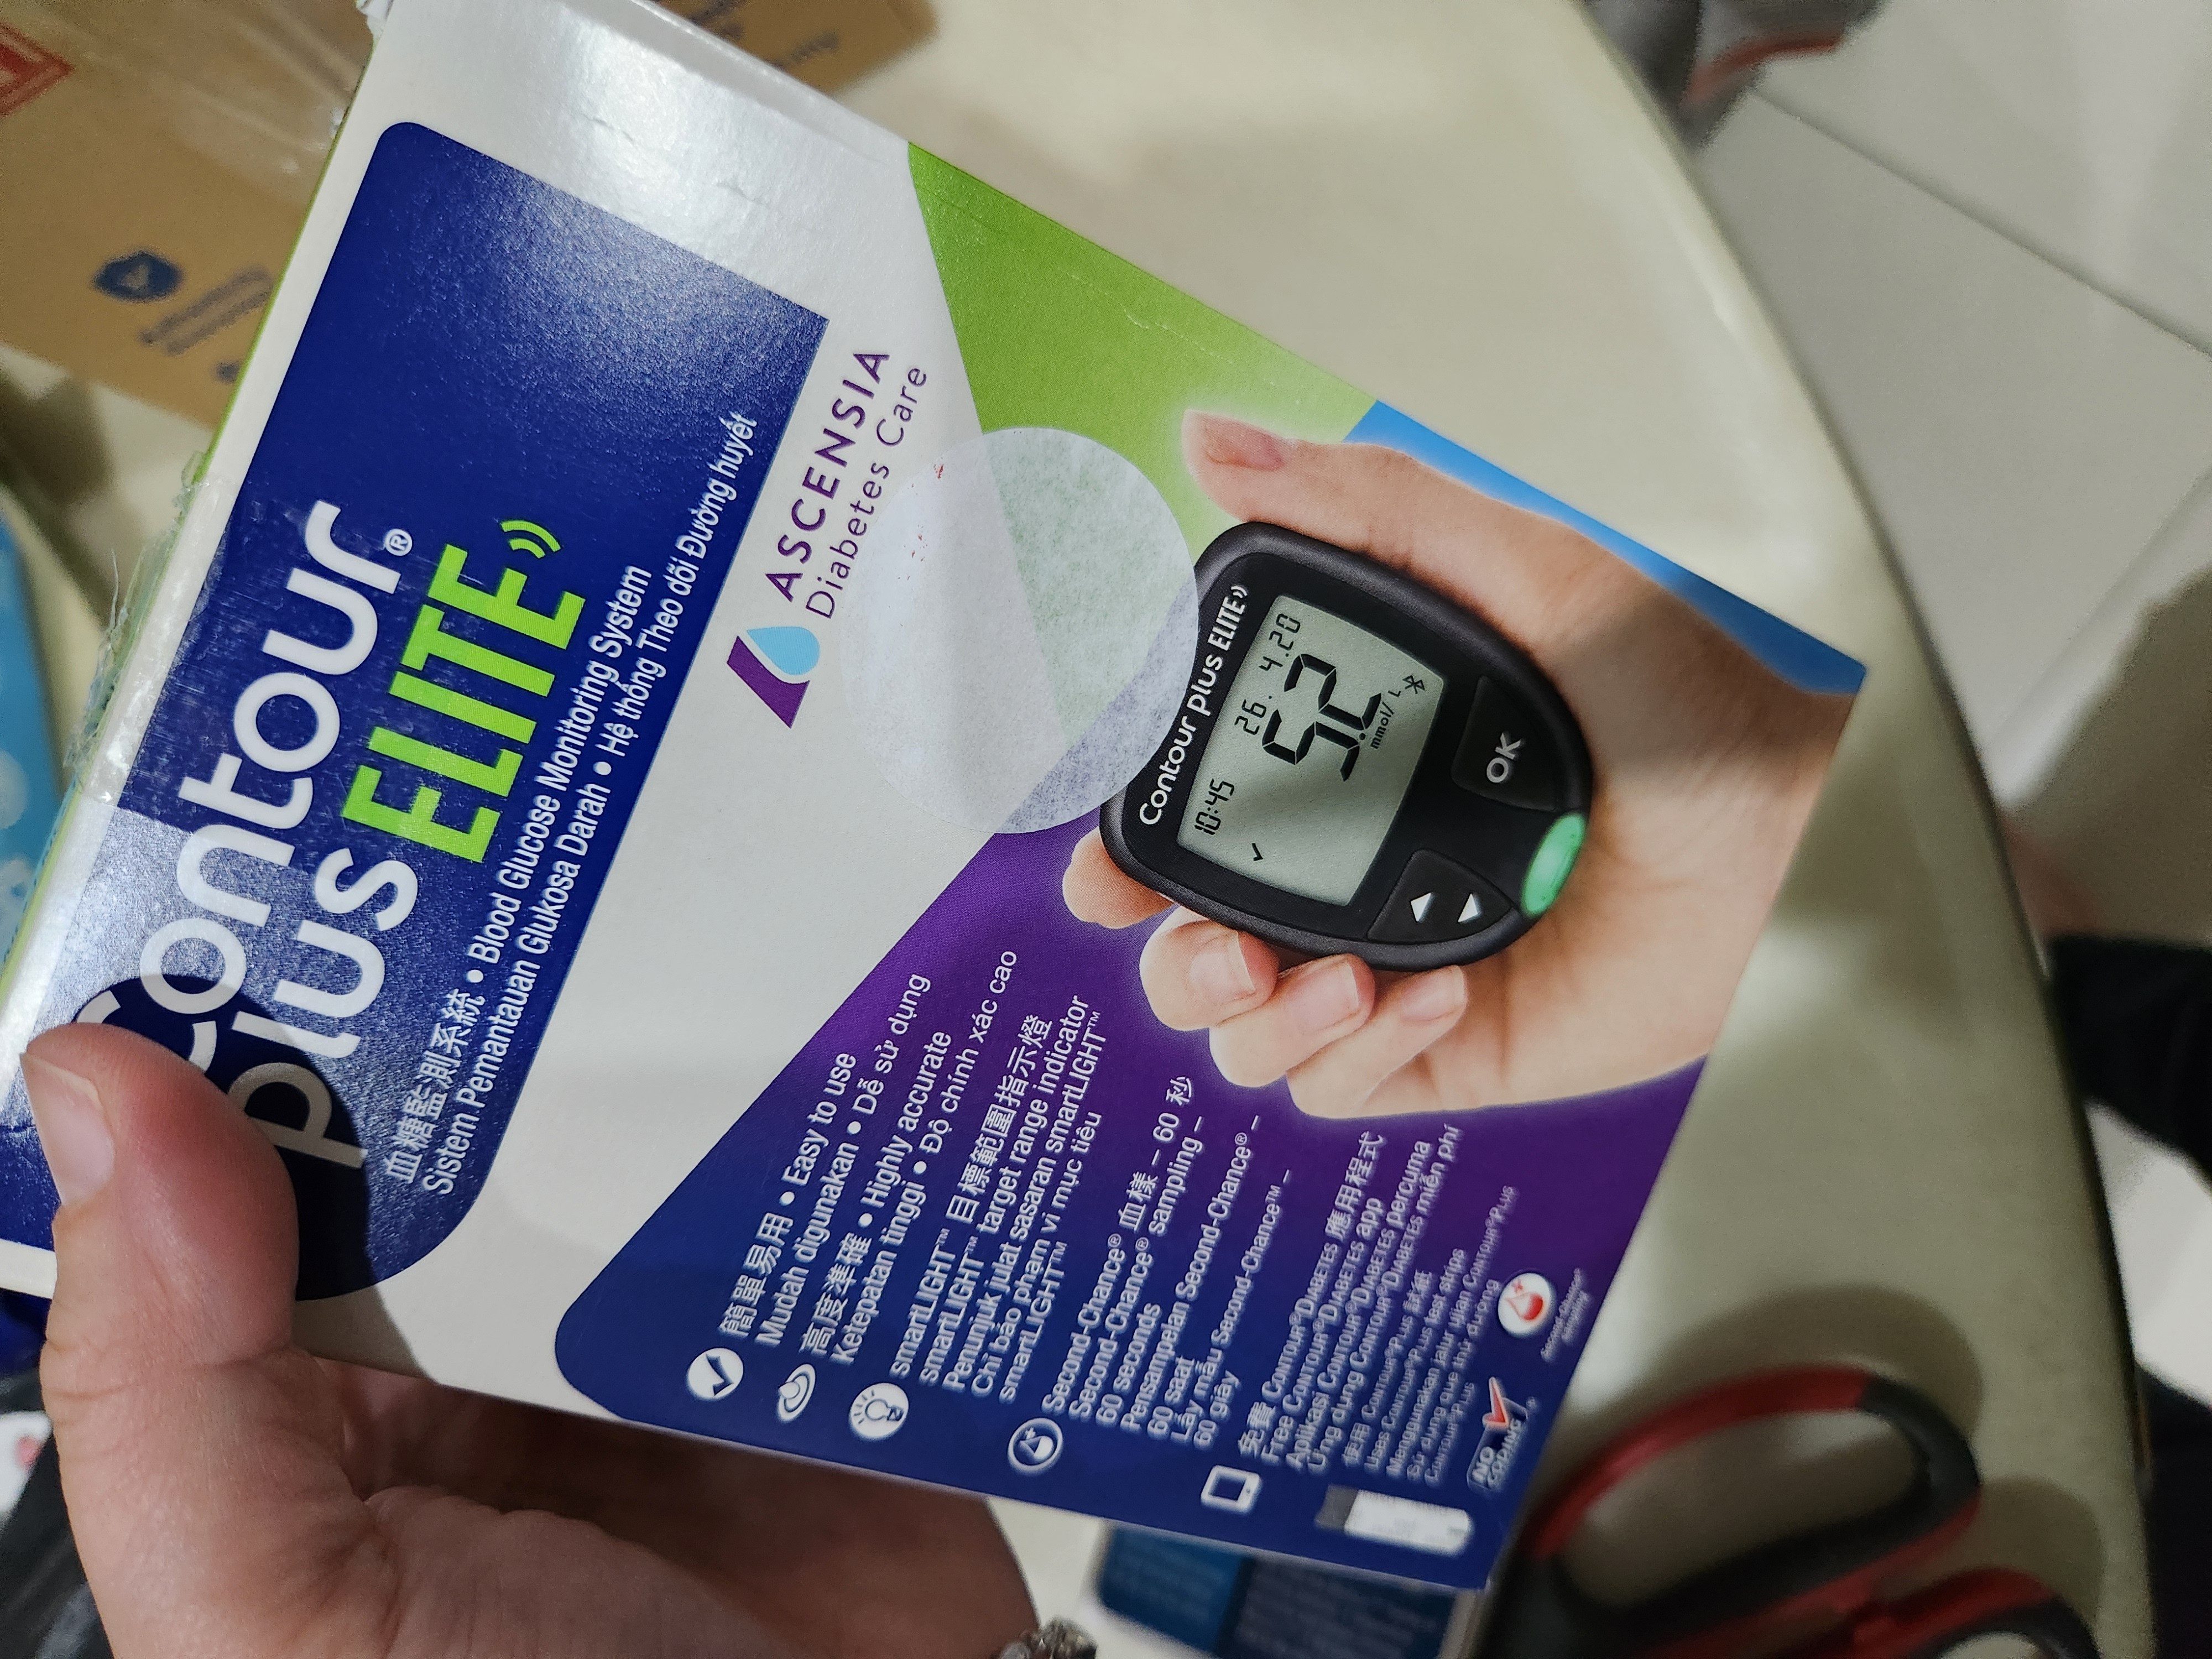 Contour Plus Elite Blood Glucose Monitoring System (Glucometer with Contour  Plus Blood Glucose Test Strip 25S Free) : : Health & Personal Care